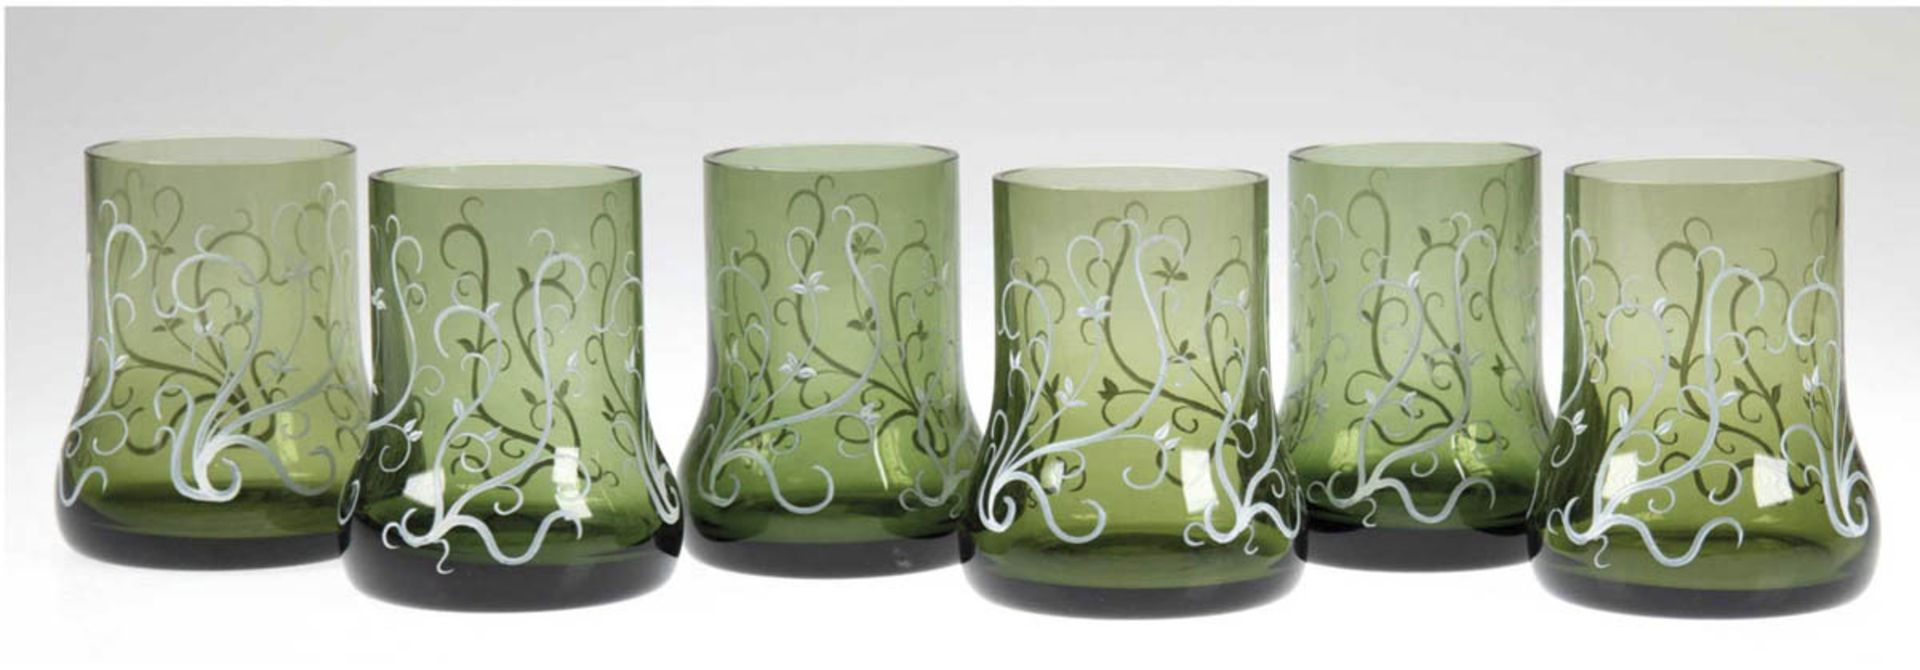 6 Jugendstil-Mehrzweckgläser, grünes Glas, mit floraler Malerei, H. 10,5 cm- - -23.80 % buyer's